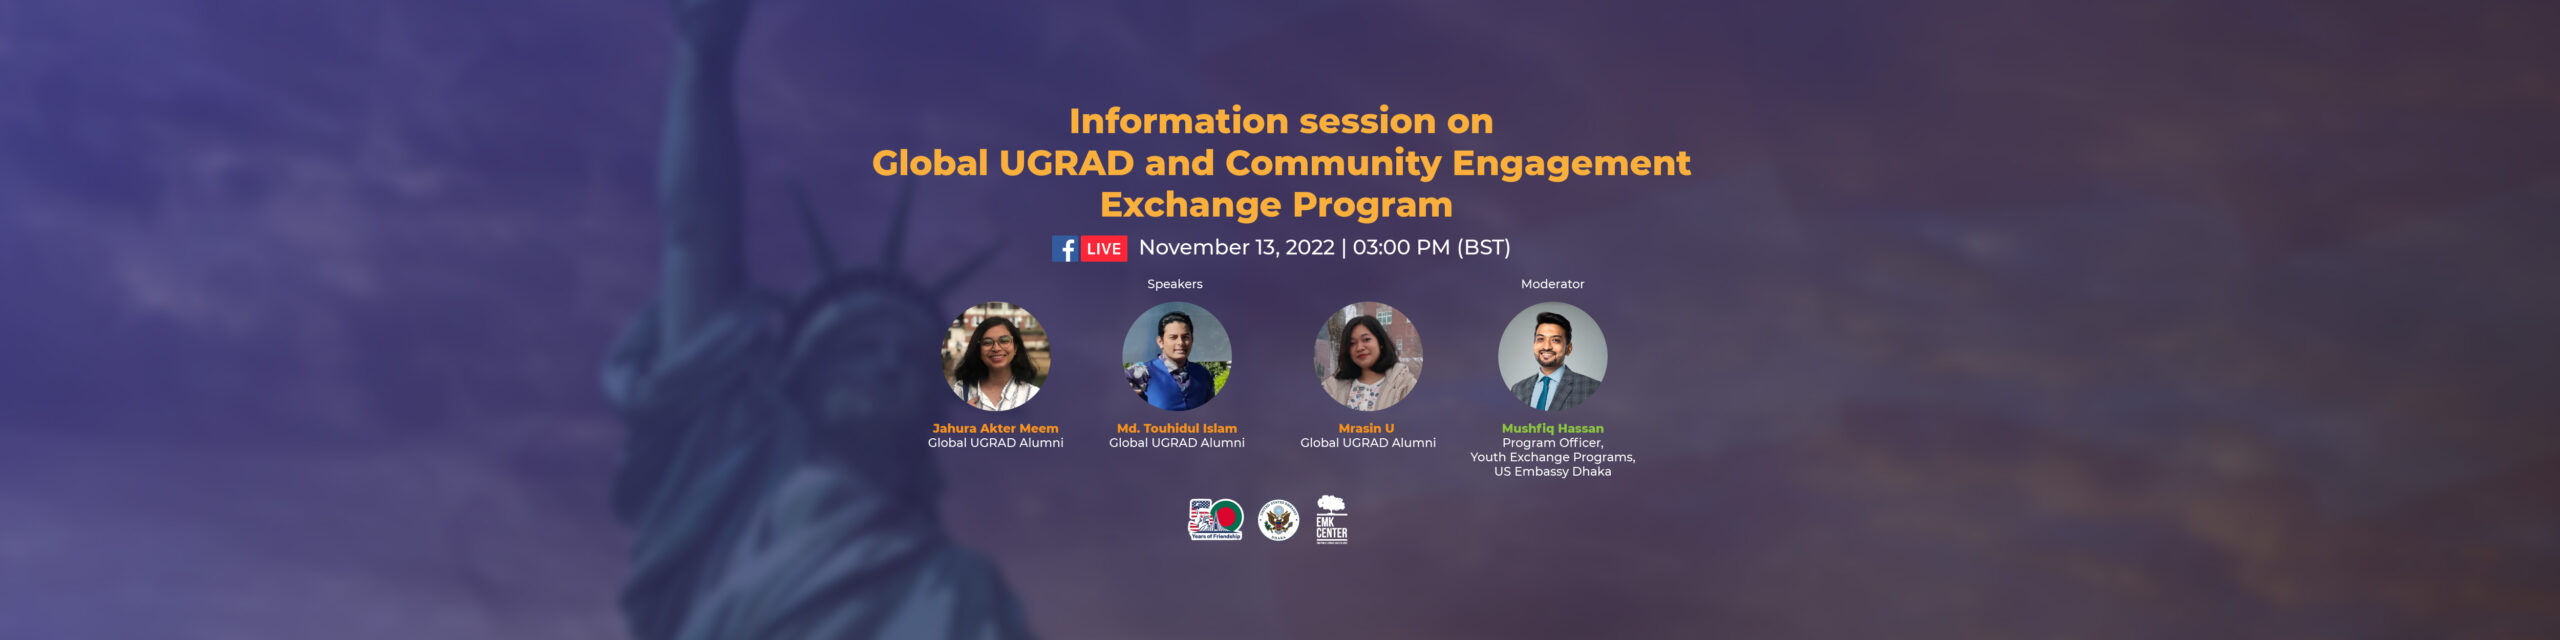 Information session on Global UGRAD and Community Engagement Exchange Program